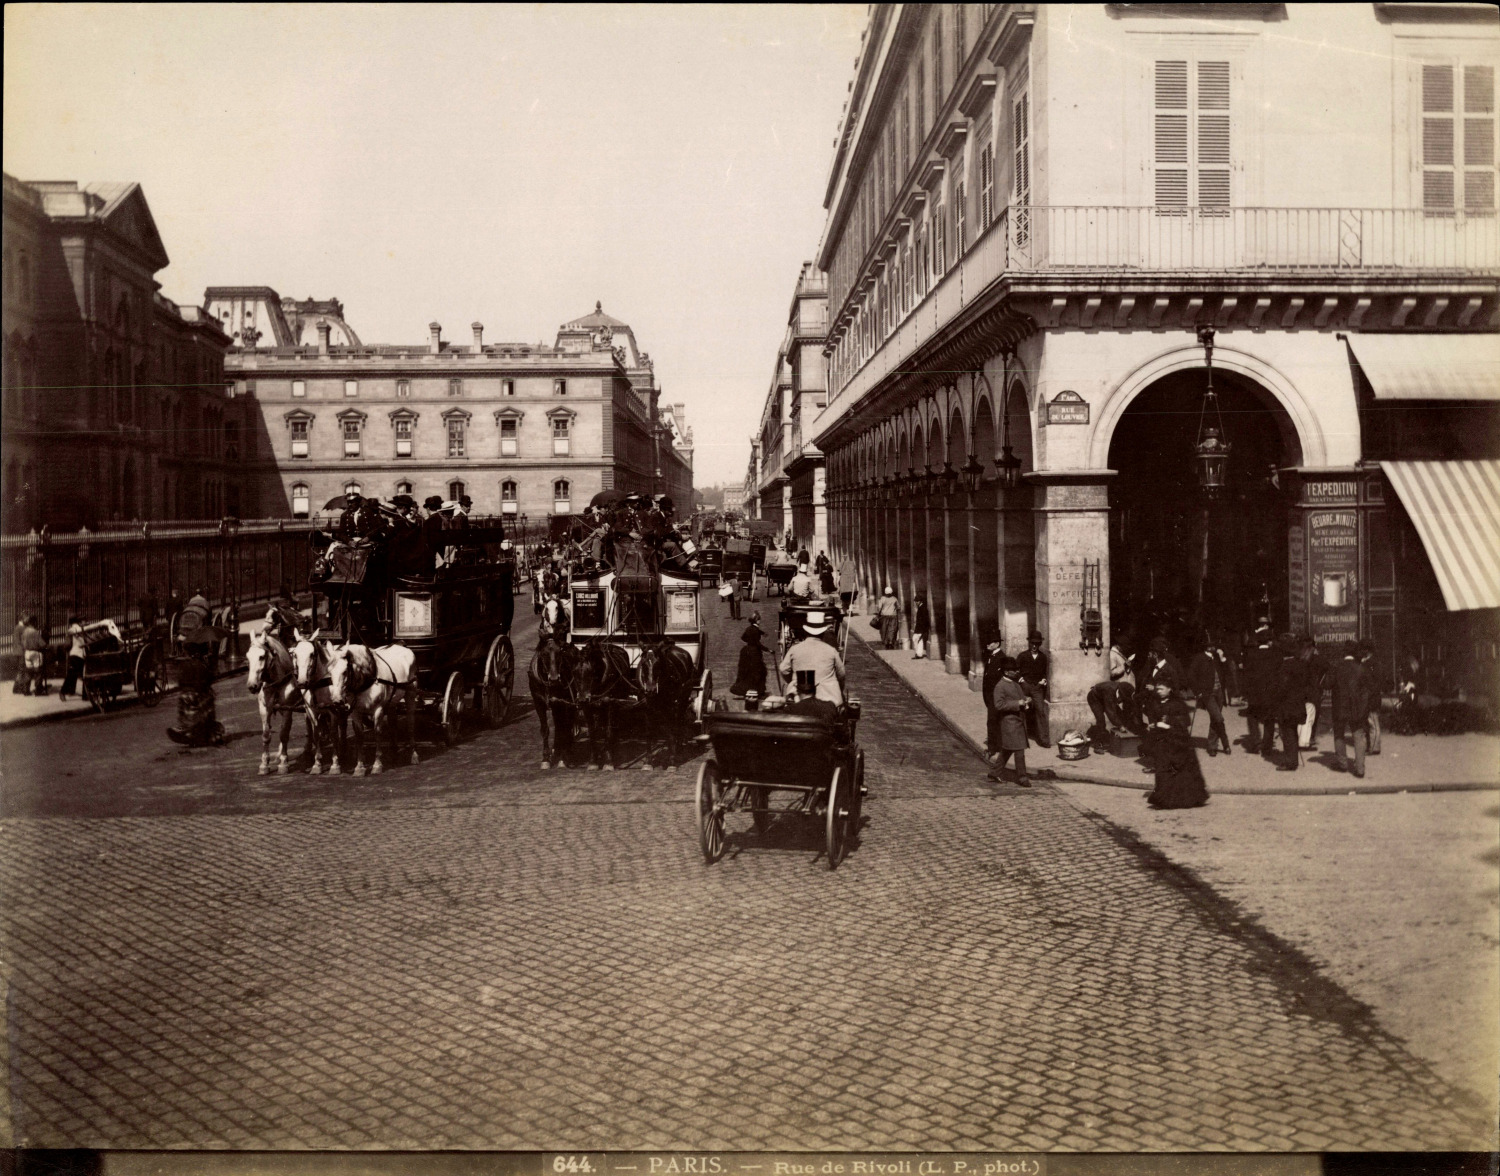 France, Paris, Rue de Rivoli, Photo. L.P. Vintage print, albumin print 2 print